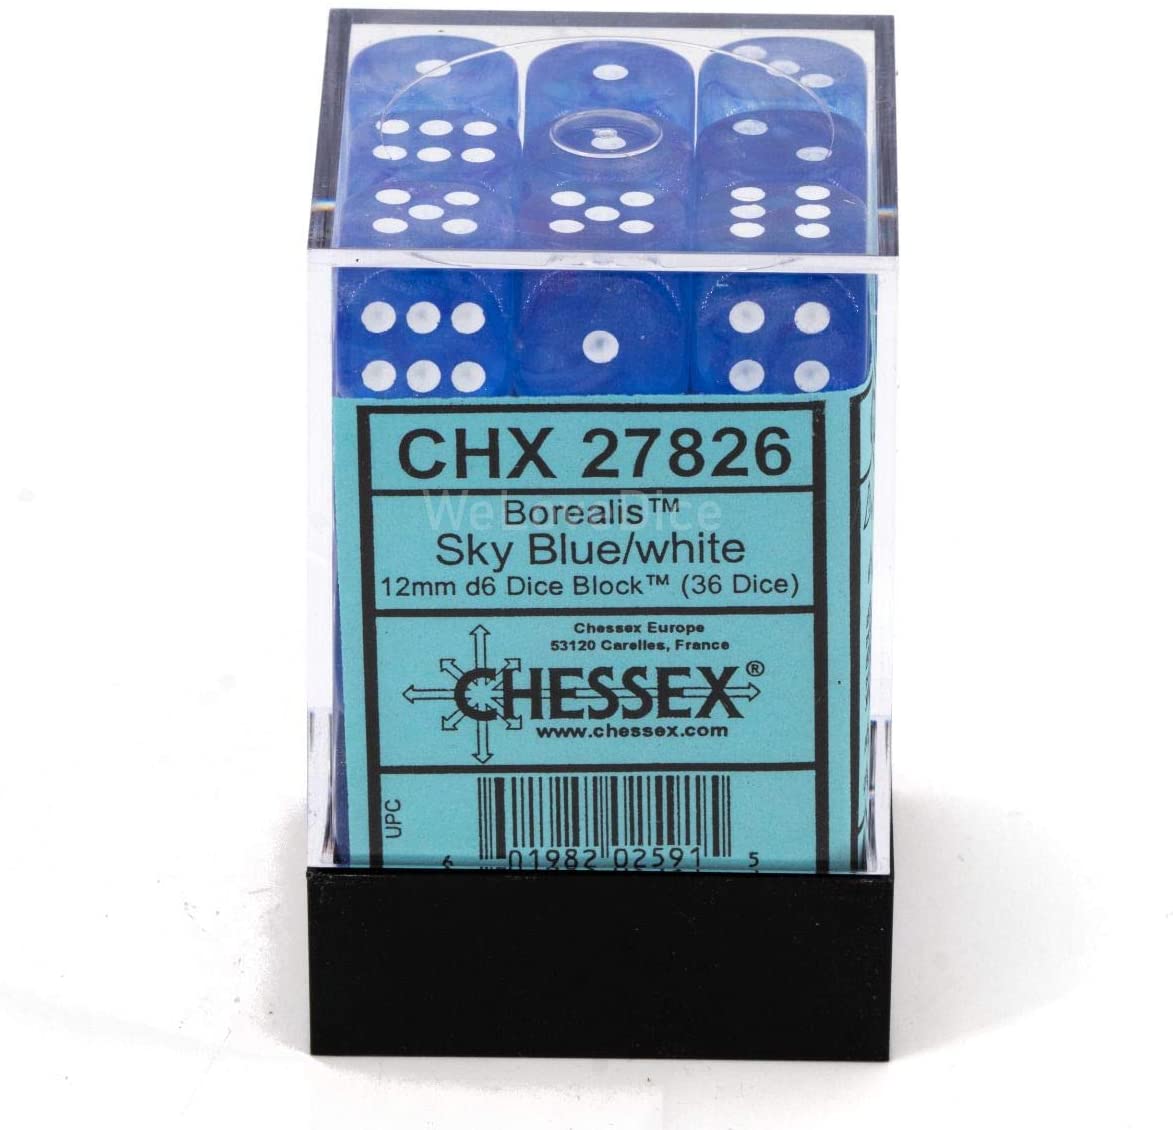 Chessex Dice: D6 Block 12mm - Borealis - Sky Blue with White (CHX 27826) - Gamescape